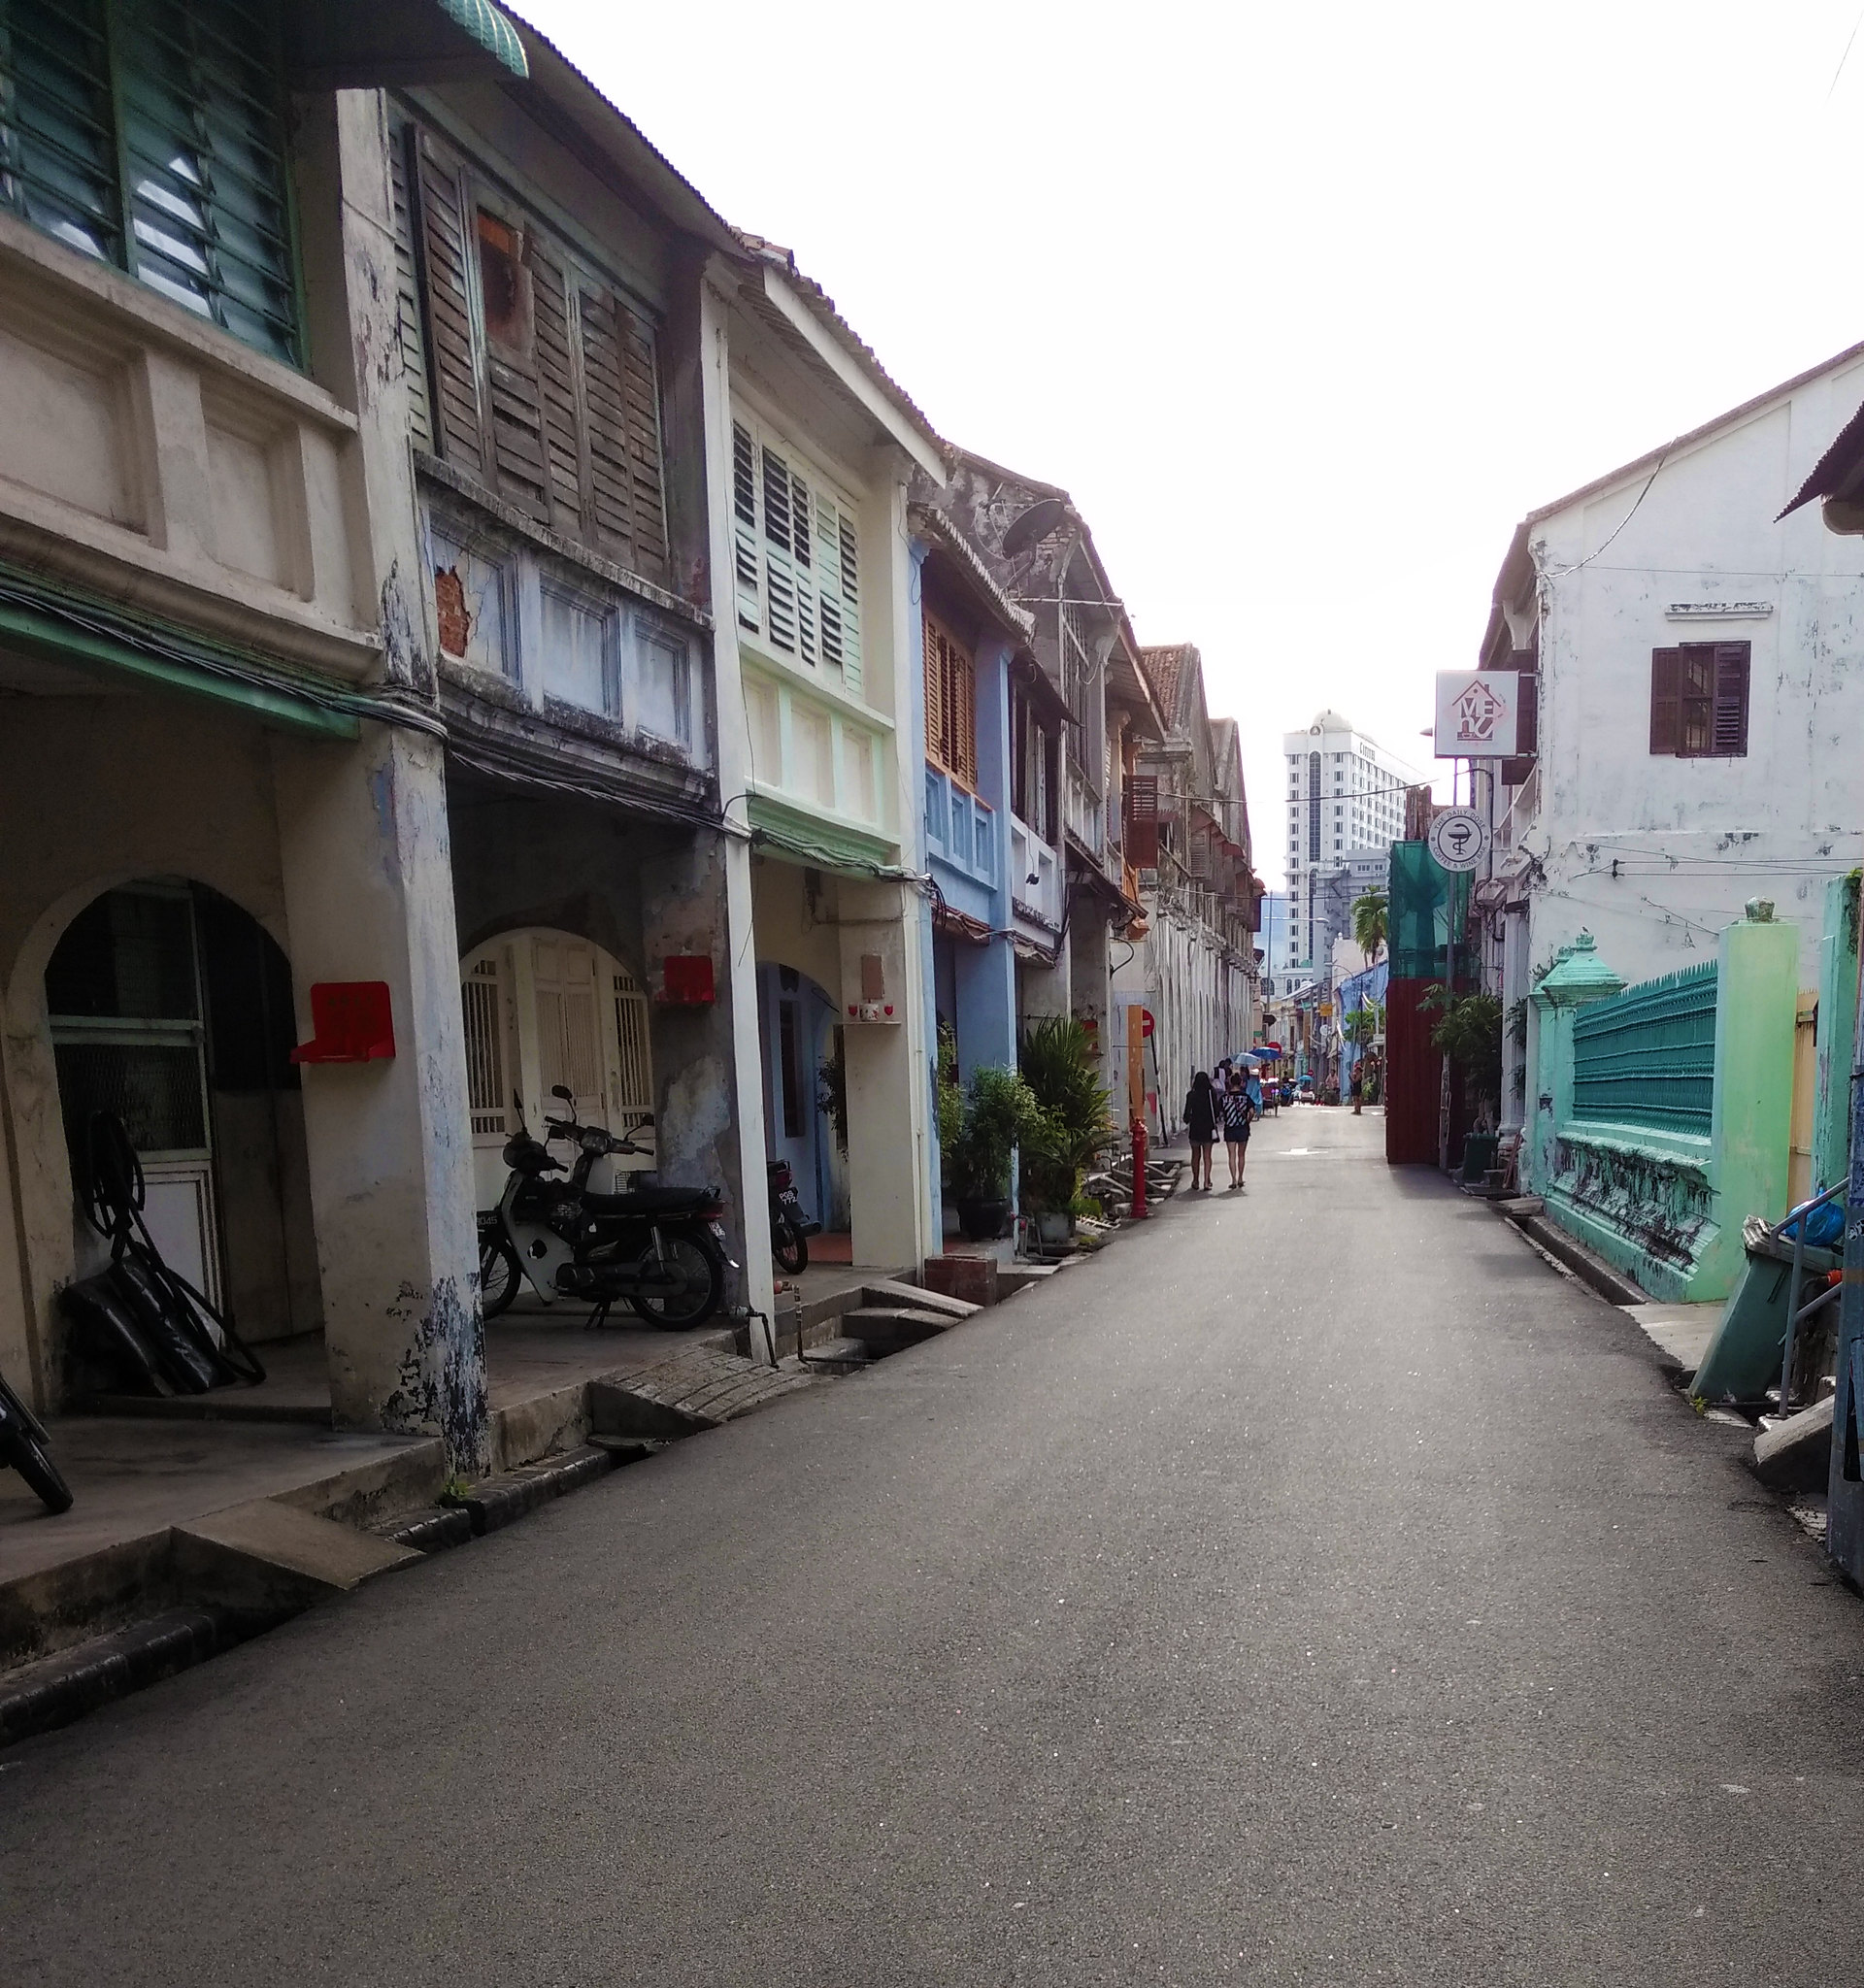 The so charming Armenian street, George Town - Penang